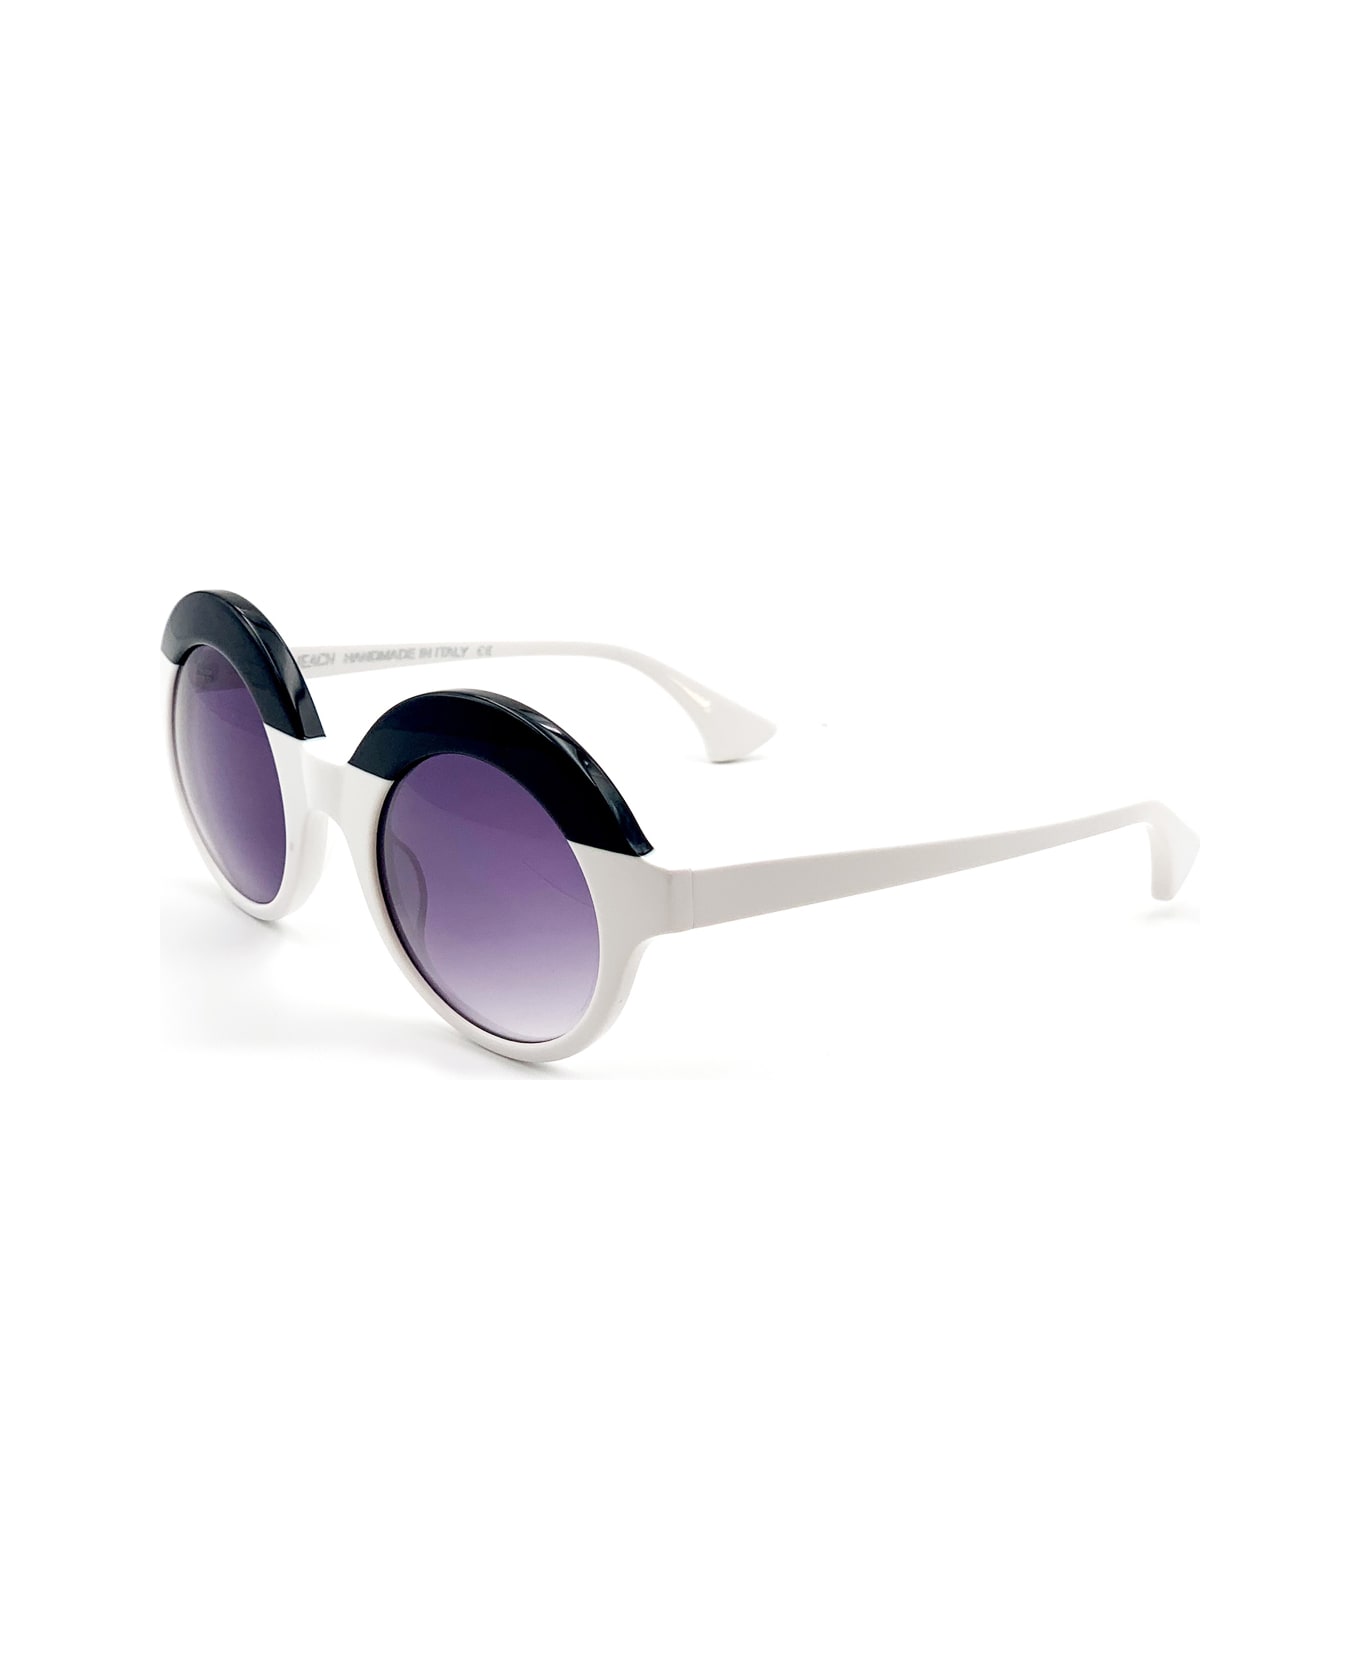 Silvian Heach Okinawa/s 01 Sunglasses - Bianco